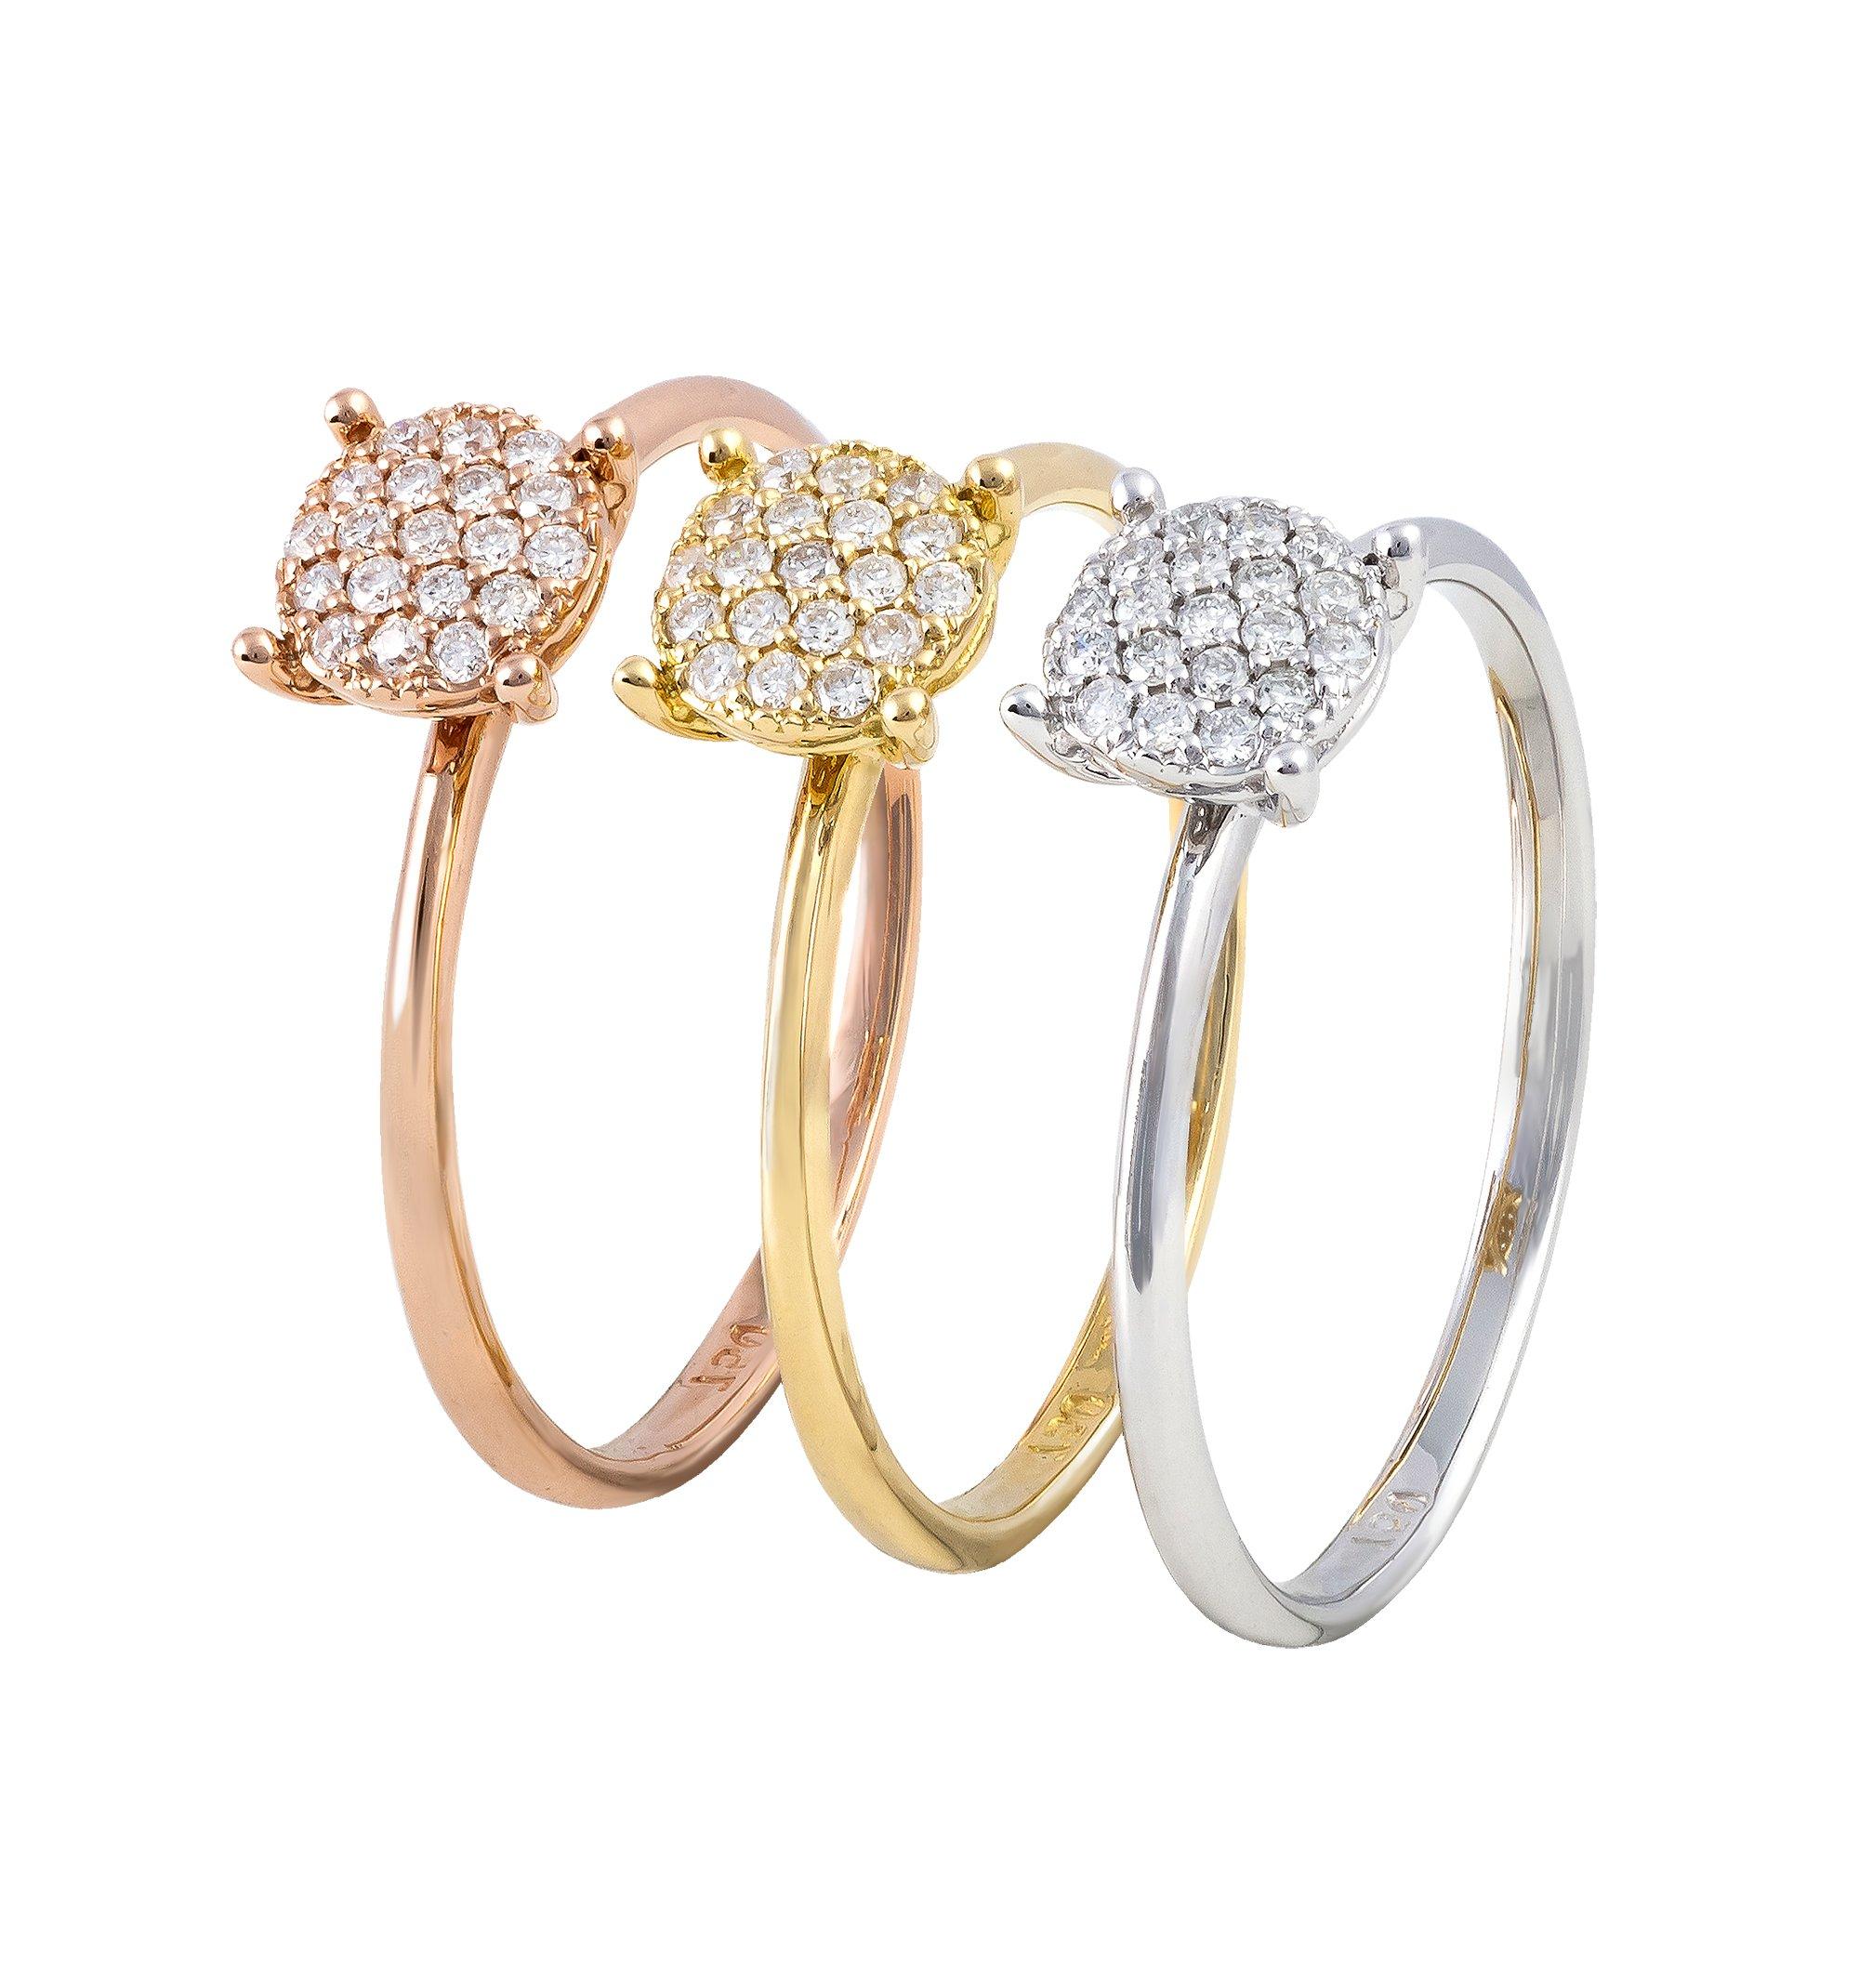 Set of 3 Diamond RINGS 18K Rose, White and Yellow Gold Diamond 0.35 Cts/39 Pcs